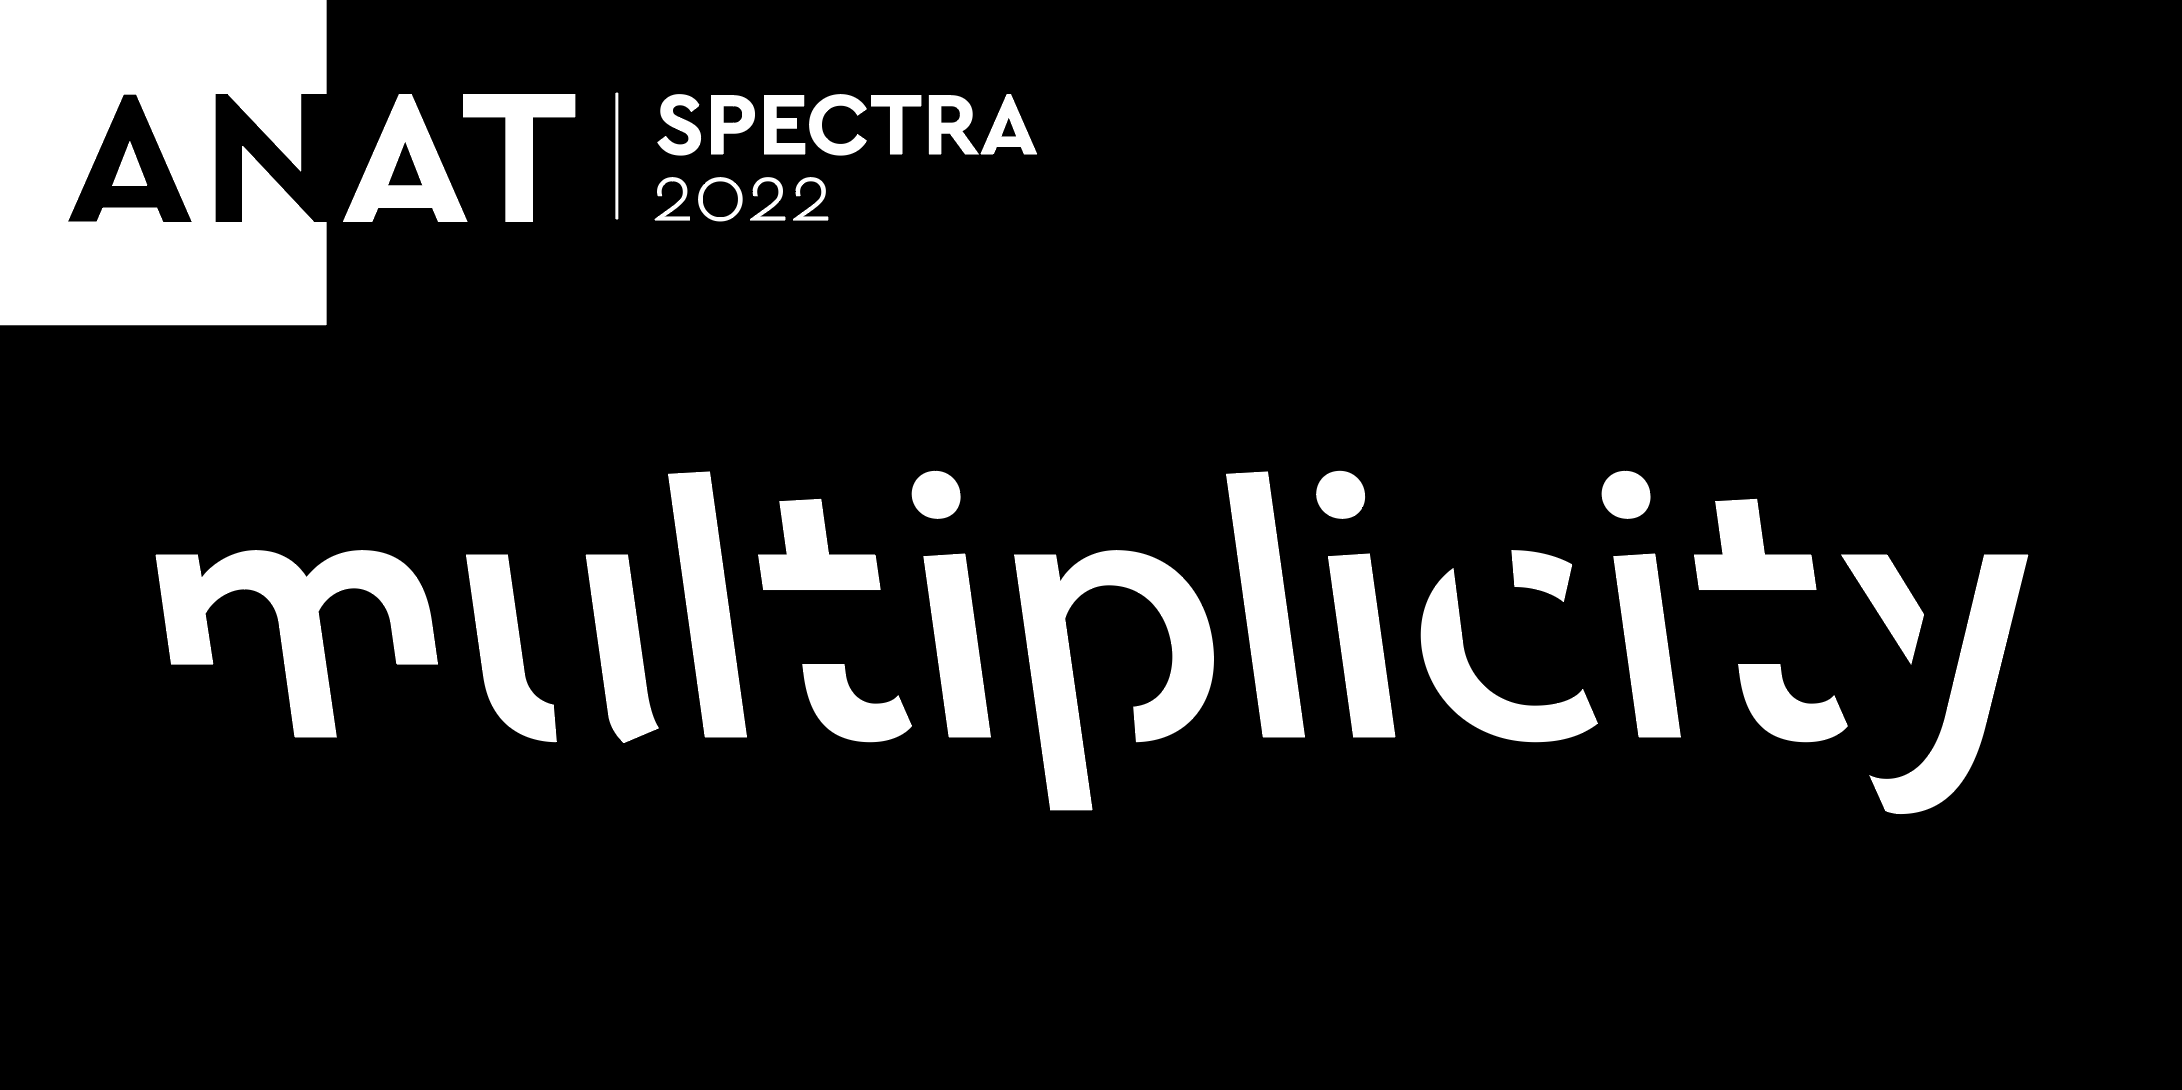 ANAT SPECTRA 2022 branding on a black background